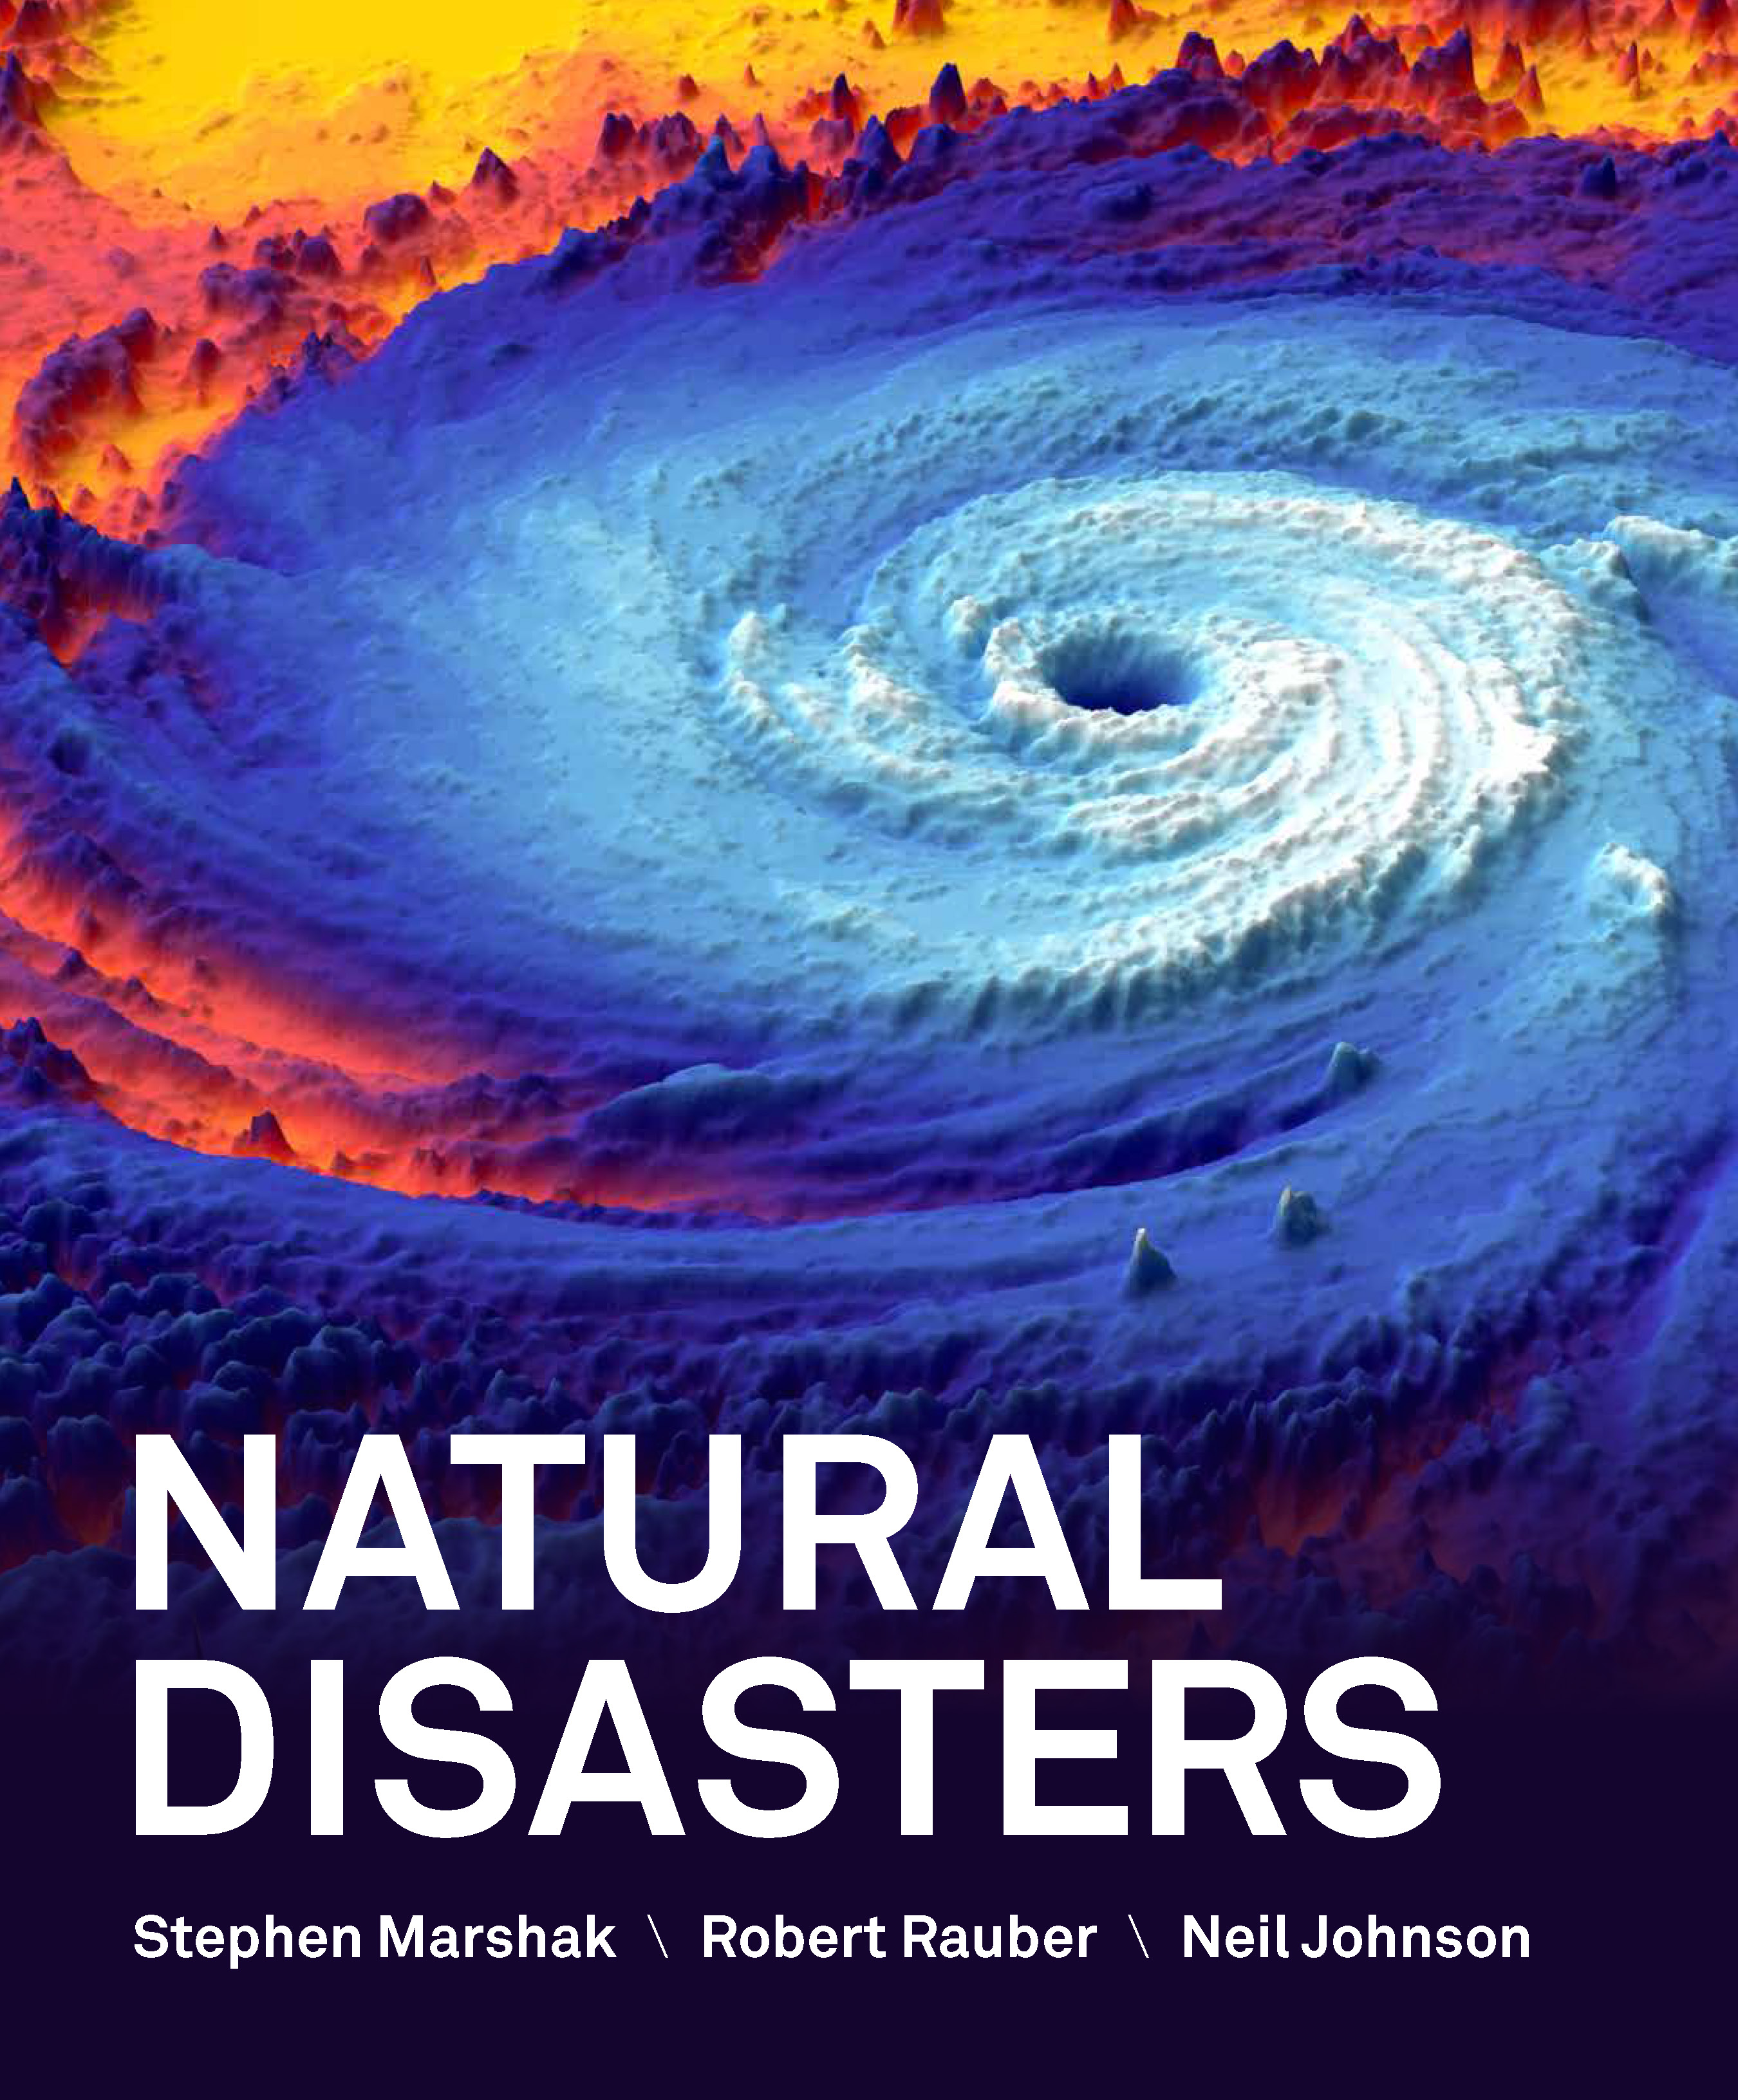 Natural Disasters (first Edition) by Stephen Marshak; Robert Rauber; Neil Johnson